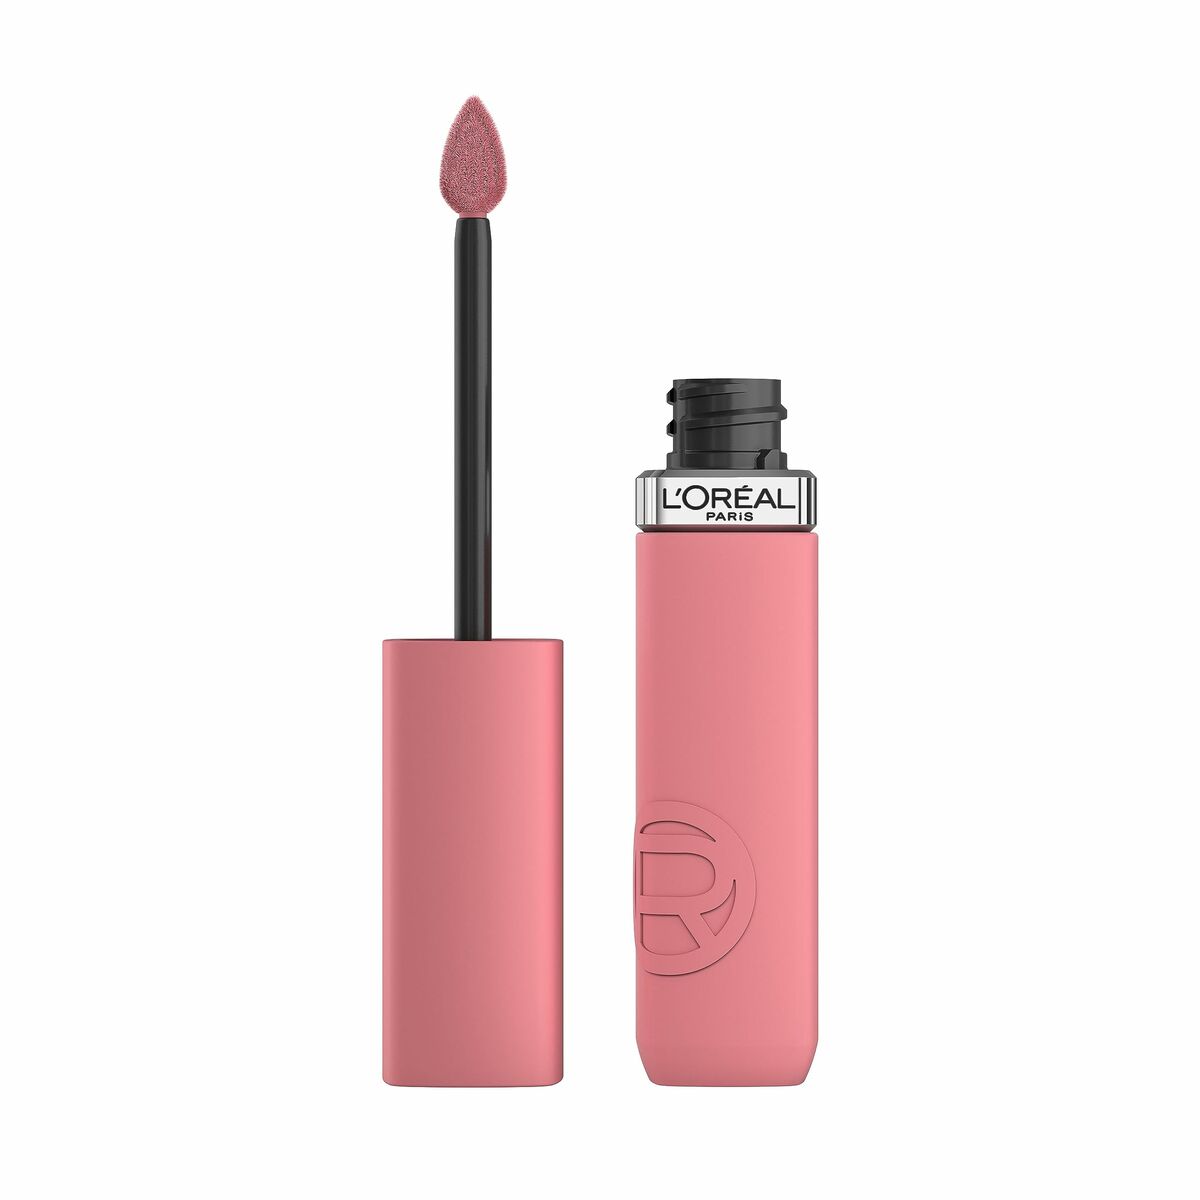 Lipgloss L'Oreal Make Up Infaillible Matte Resistance Lipstick & Chill Nº 200 (1 Stück) - CA International  